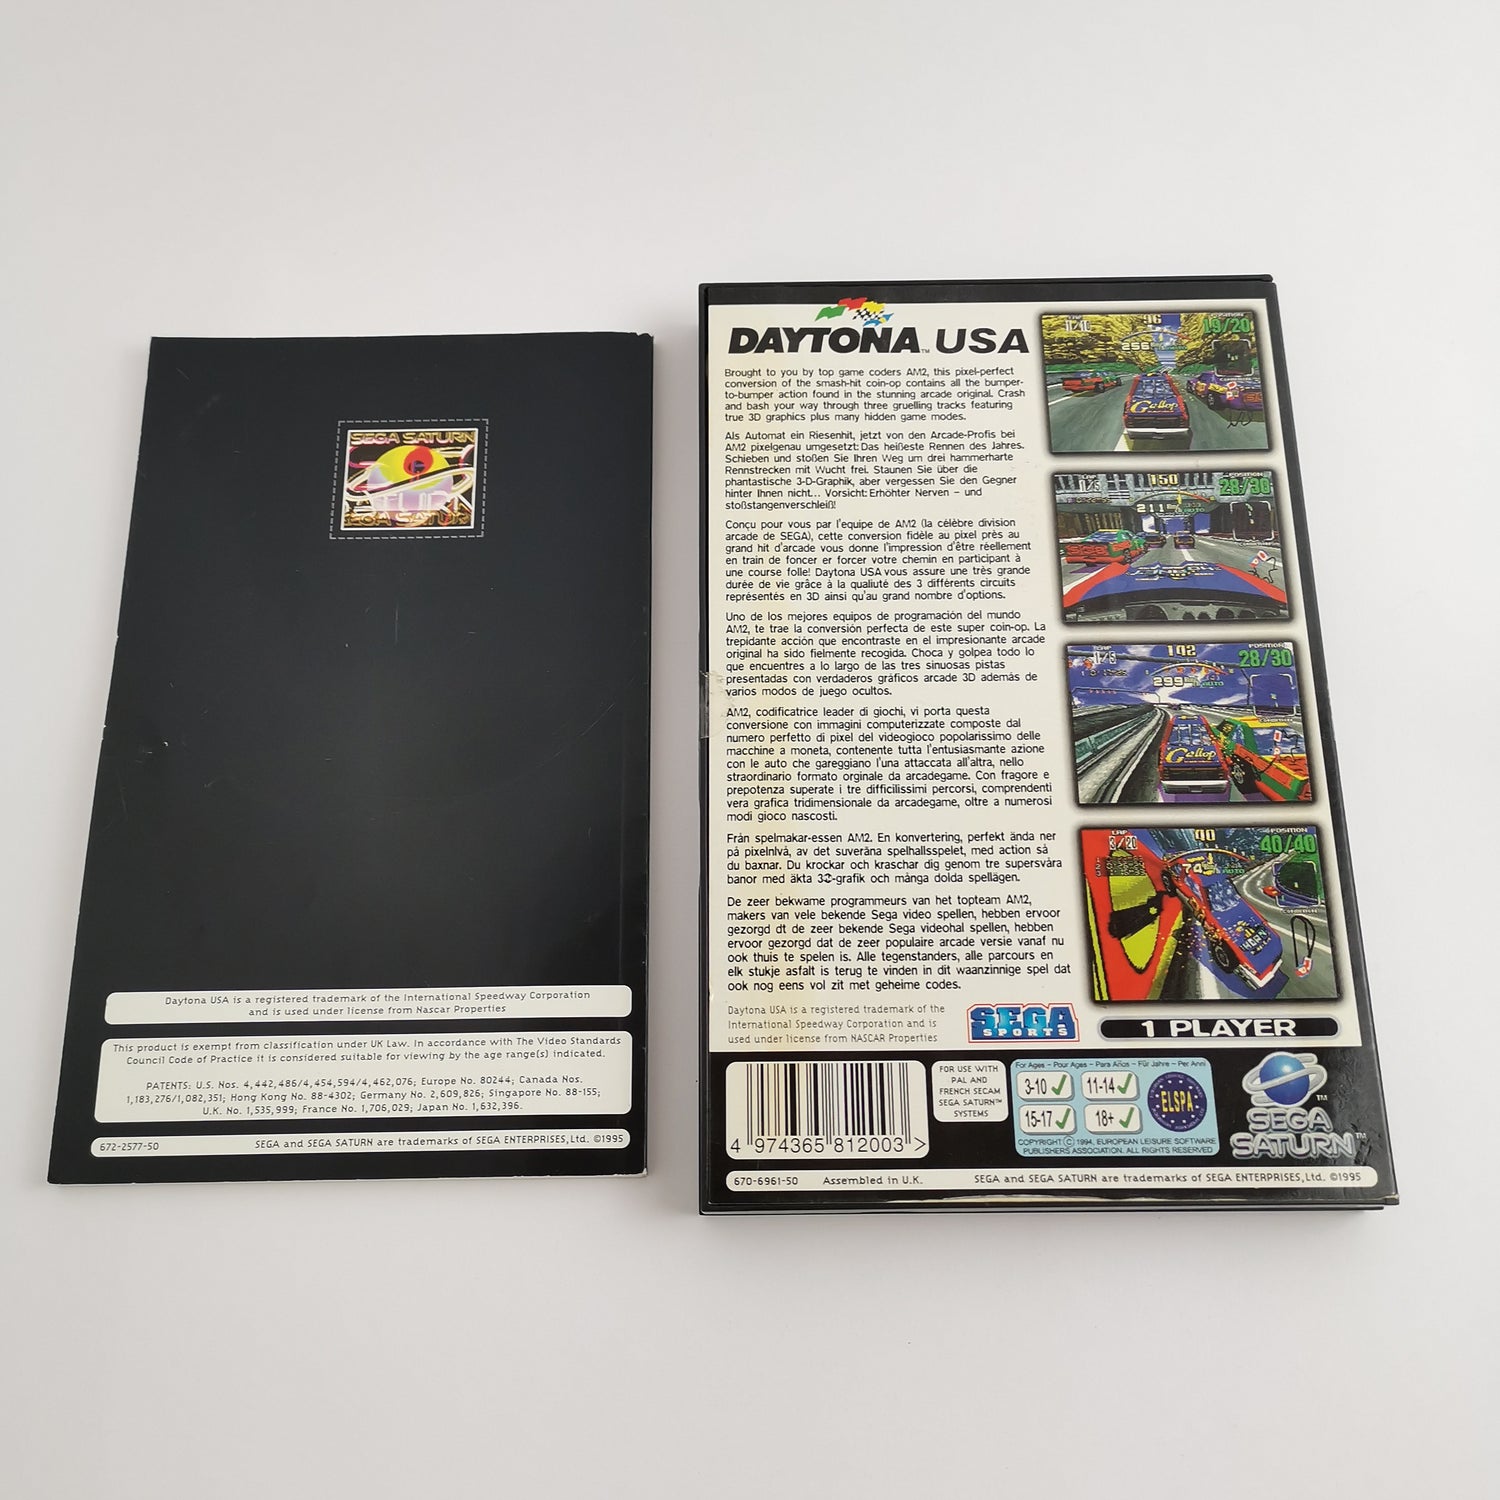 Sega Saturn game: Daytona USA in original packaging & instructions | PAL version